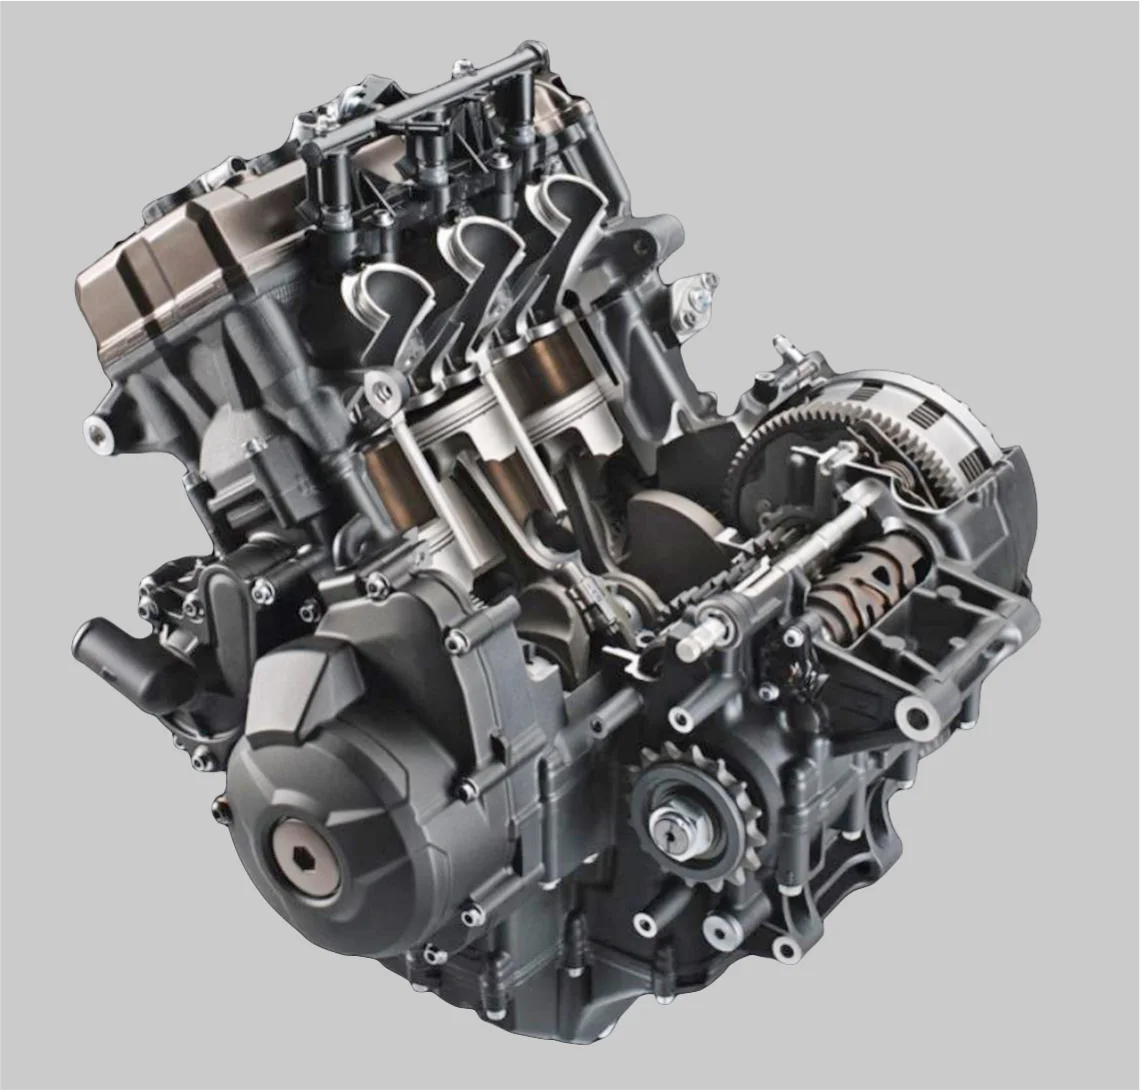 Yamaha inline-three engine